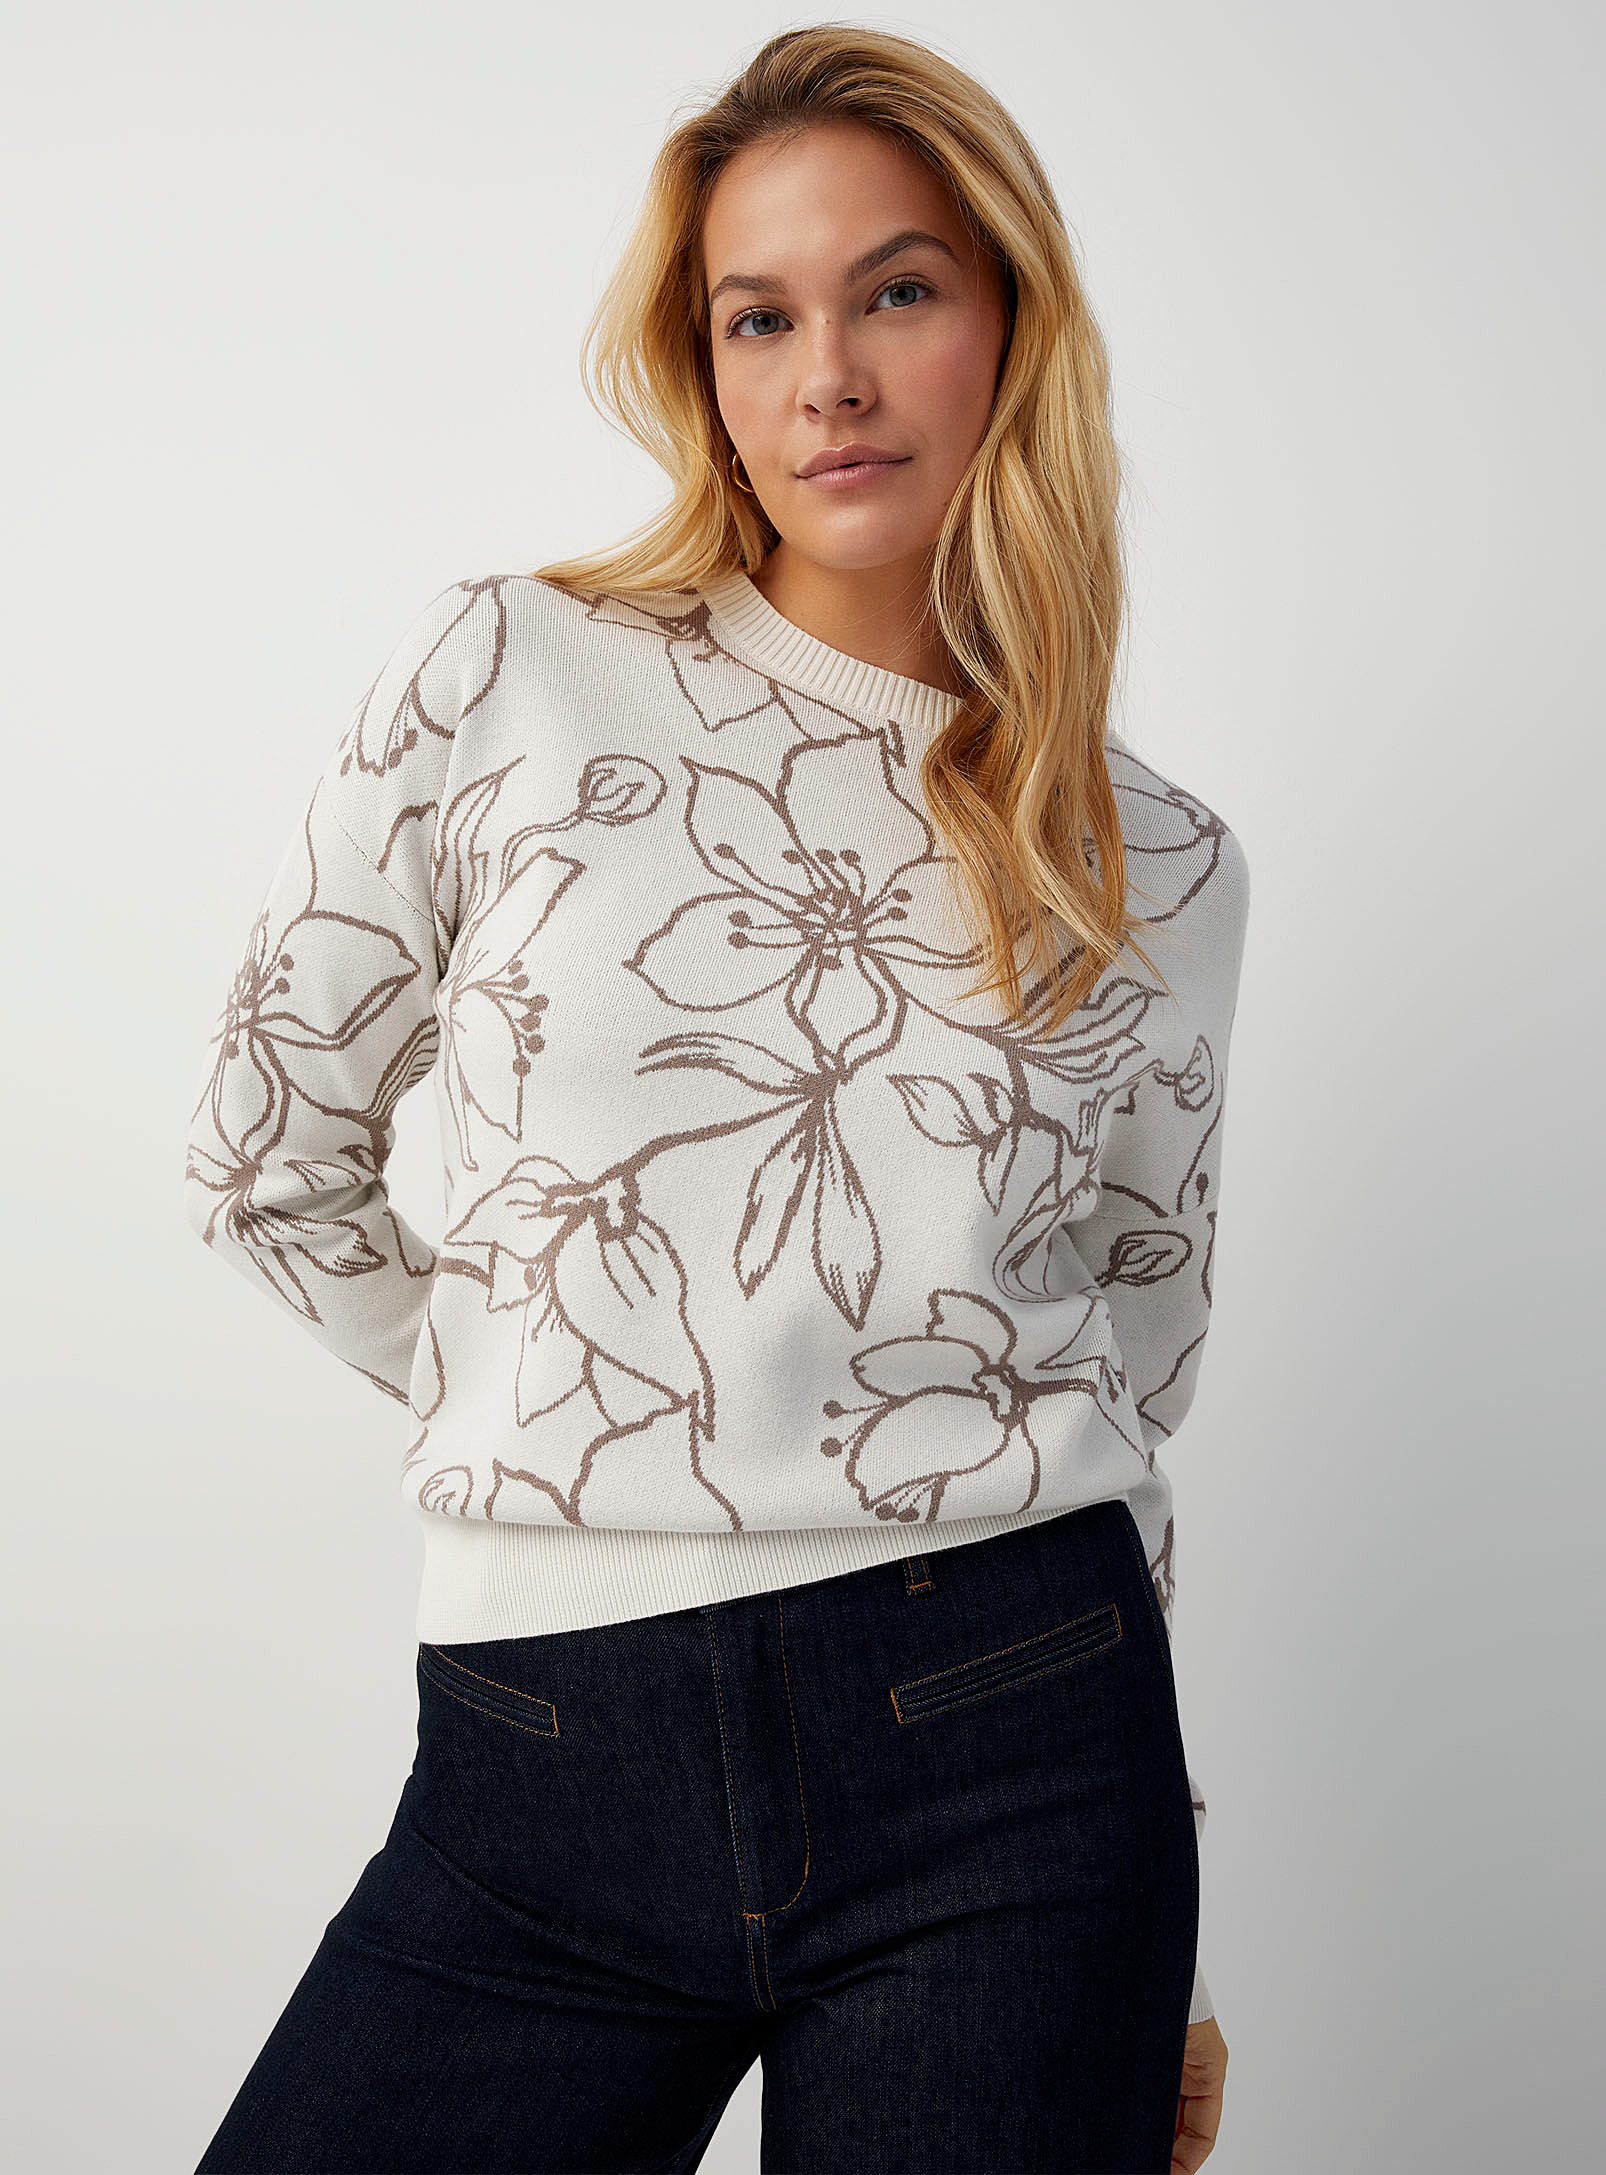 Contemporaine Floral Design Jacquard Sweater In Ivory White